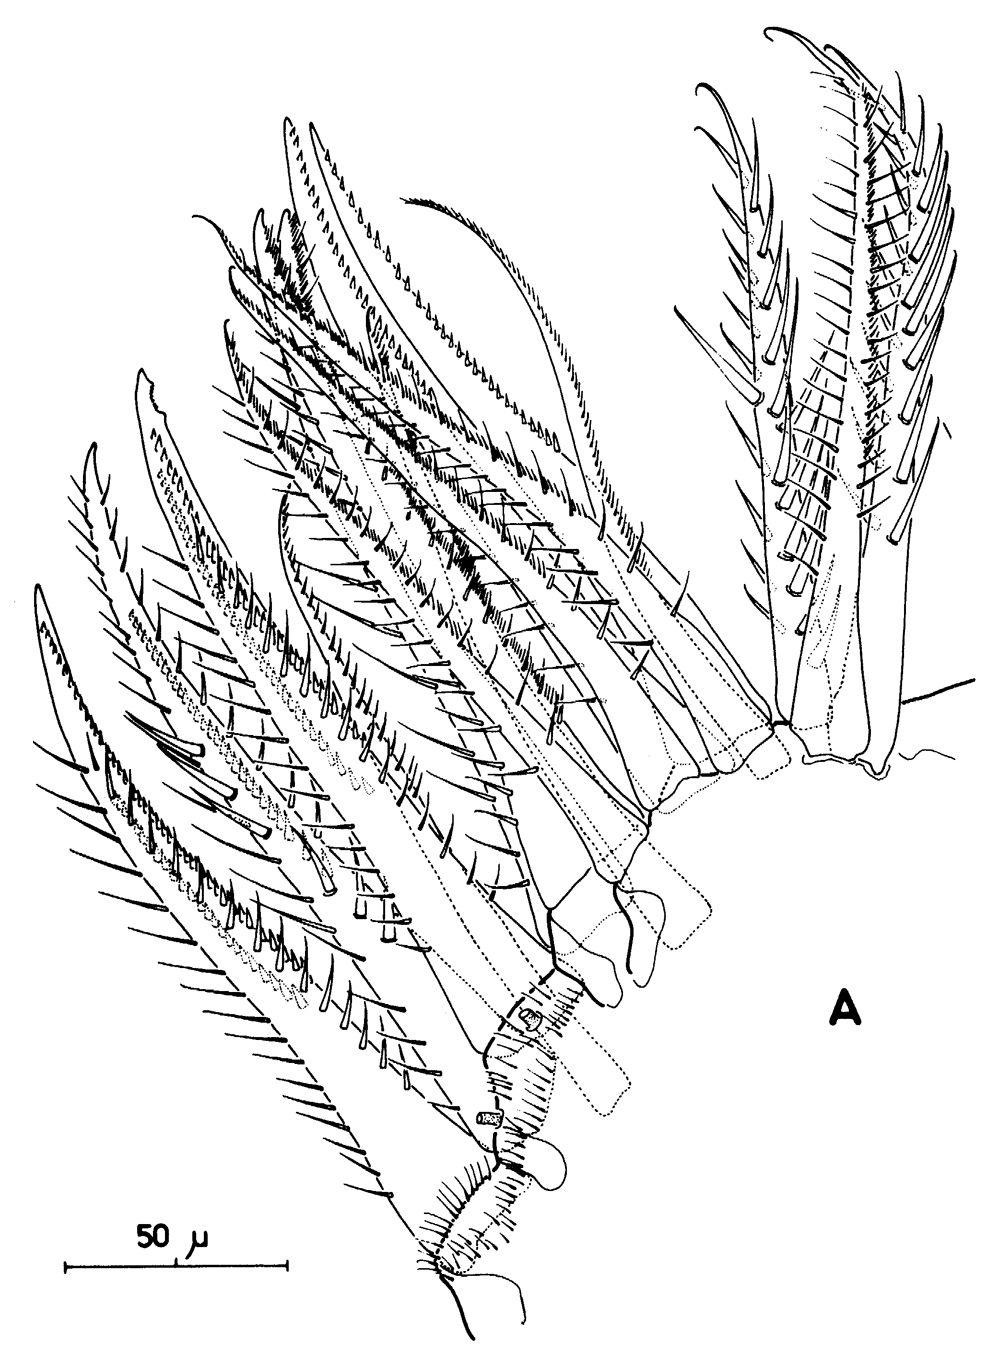 Species Pleuromamma xiphias - Plate 36 of morphological figures